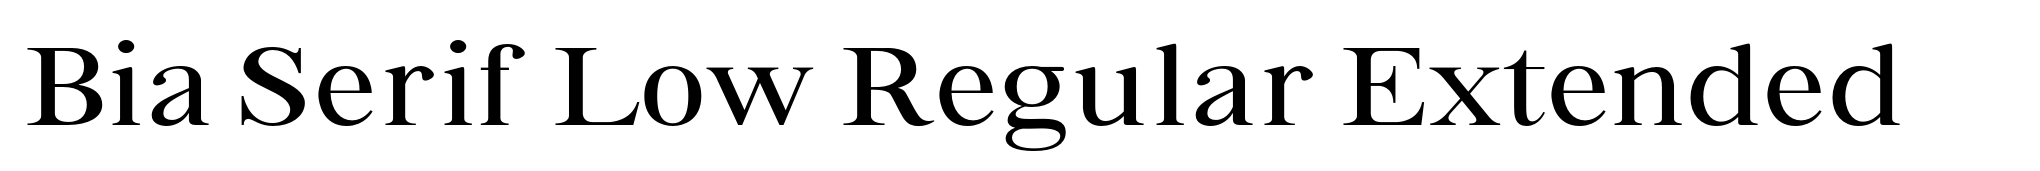 Bia Serif Low Regular Extended image